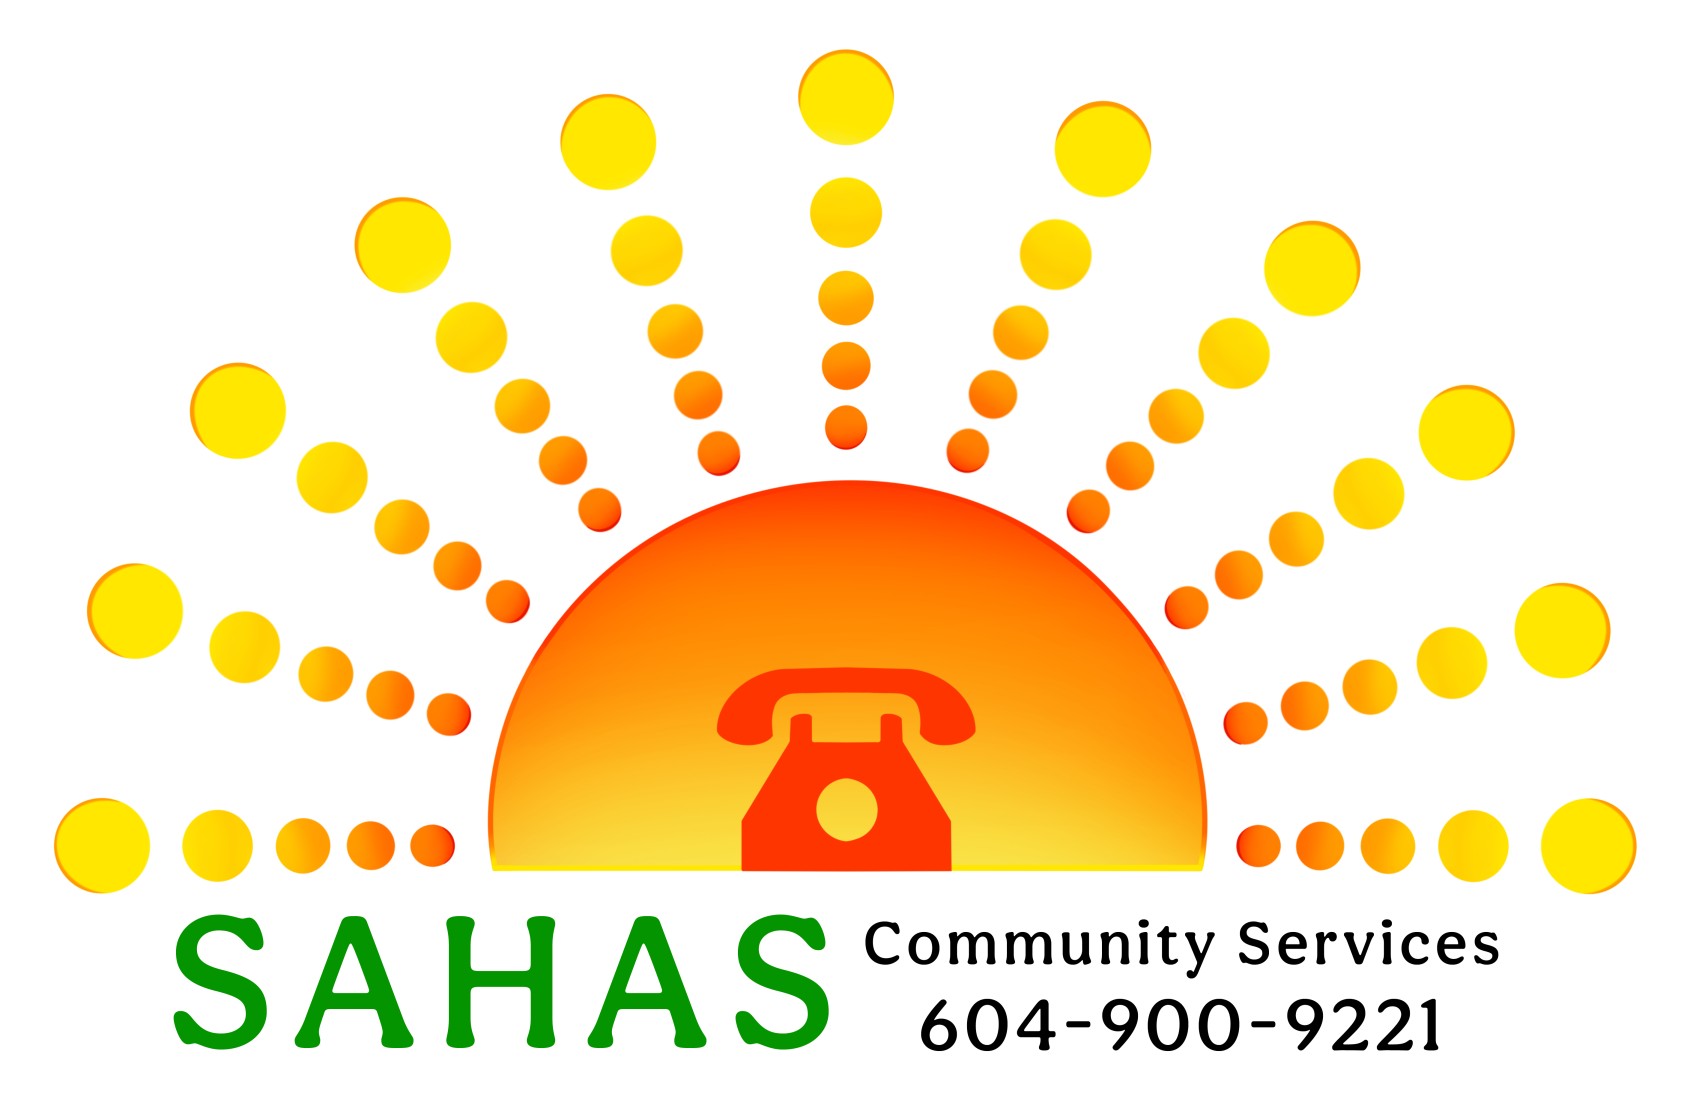 Sahas Community Services